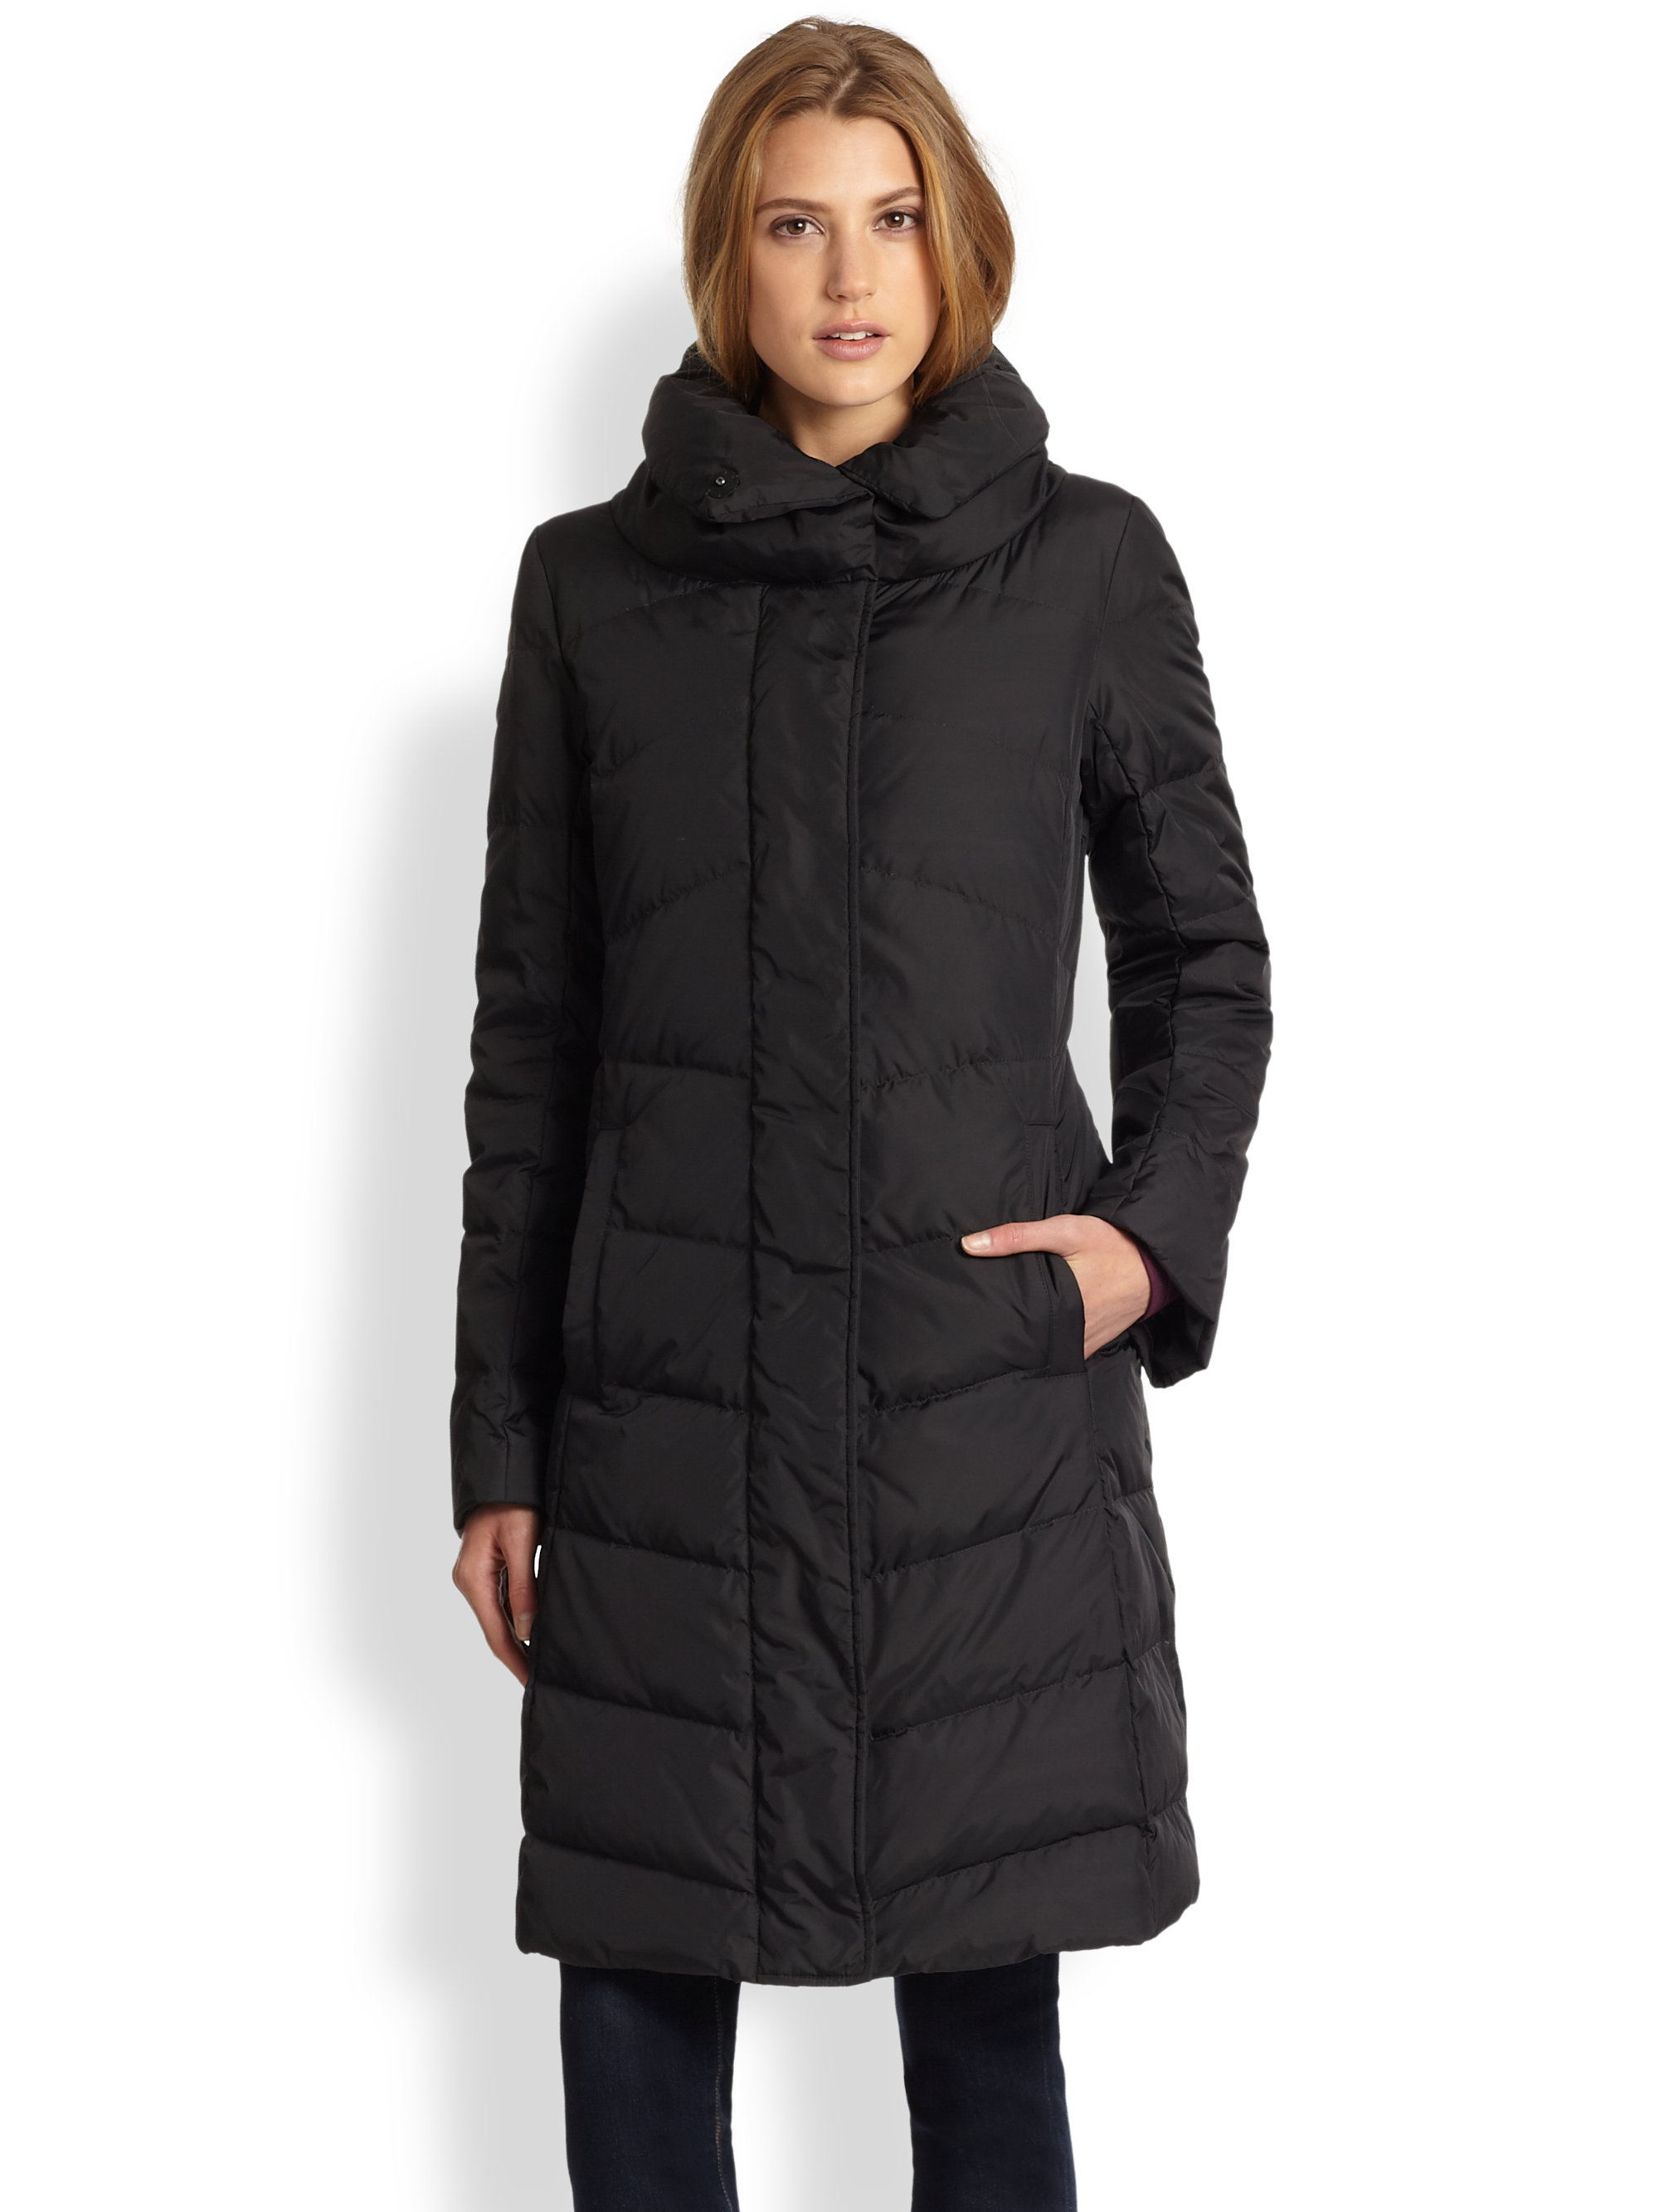 Eileen Fisher Stand Collar Puffer Coat, Buy Now, Discount, 56% OFF,  www.acananortheast.com